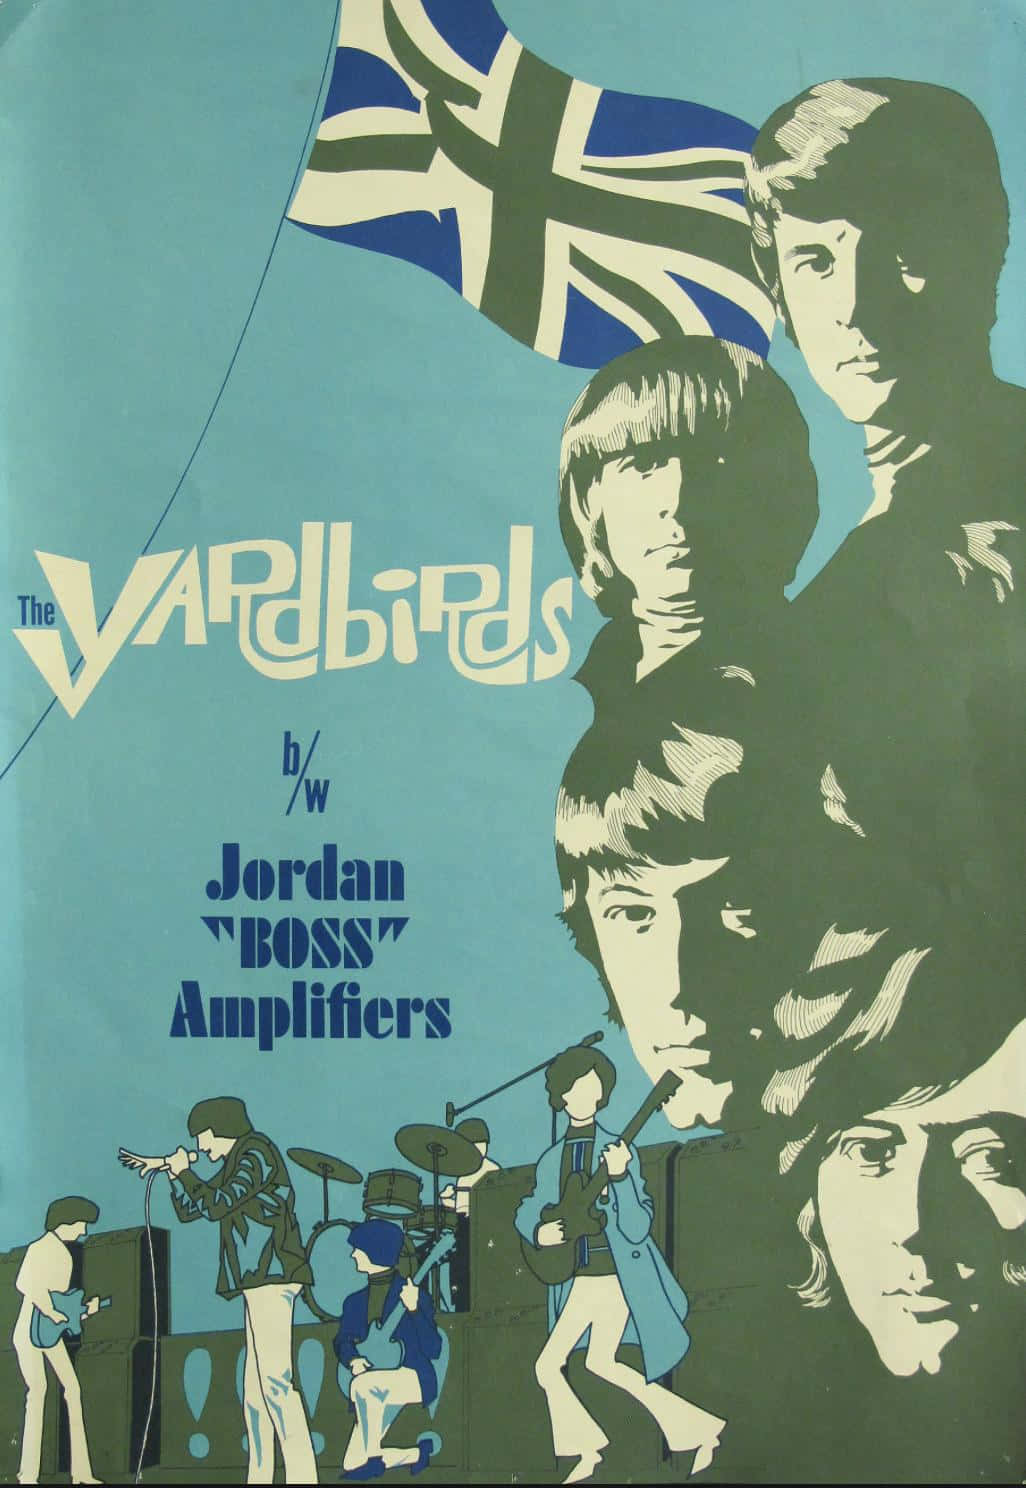 The Yardbirds Rocking Out – Vintage Jordan Boss Amplifiers Poster Wallpaper